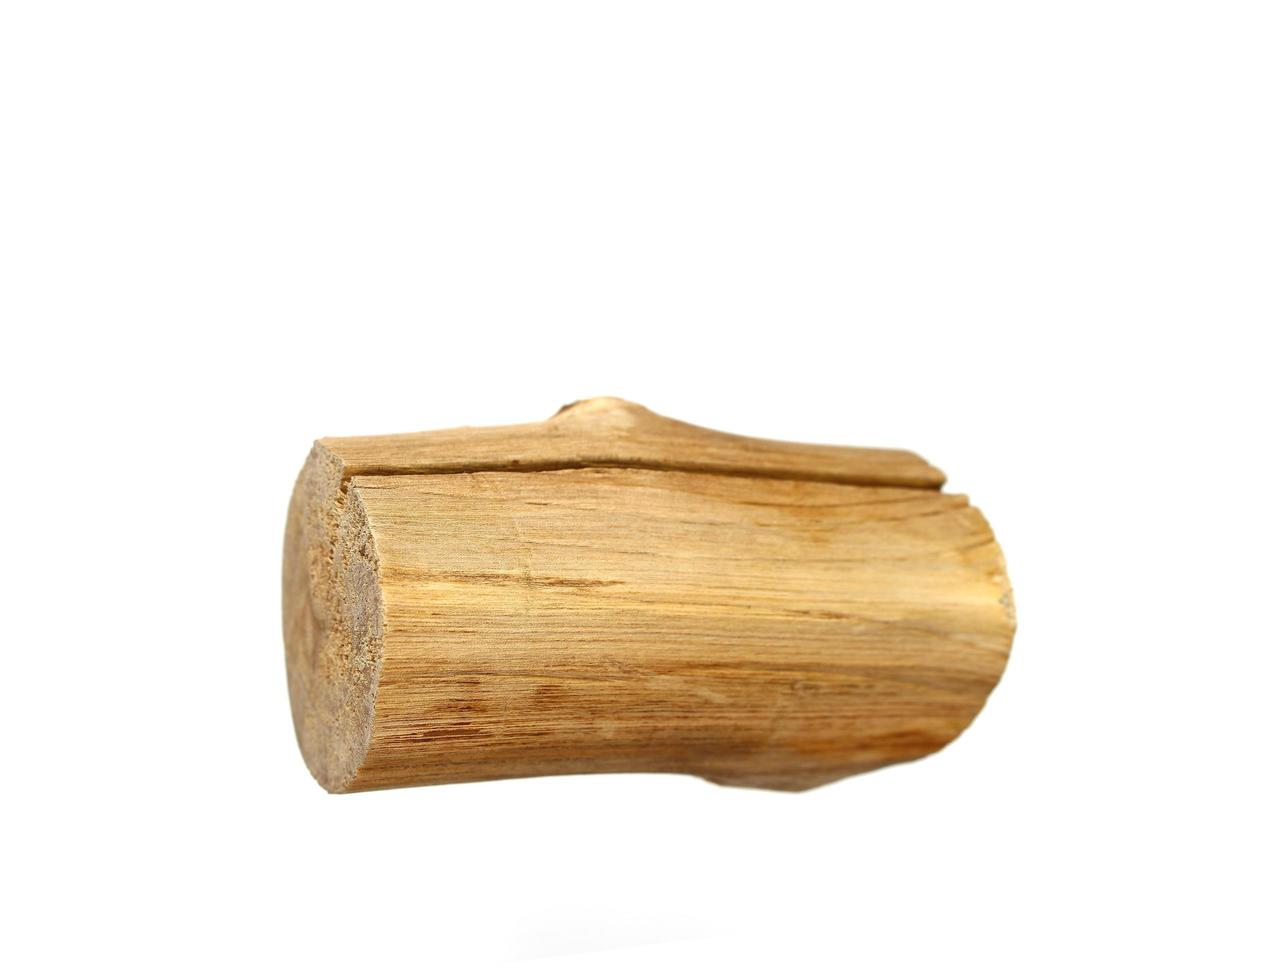 Light wooden log photo